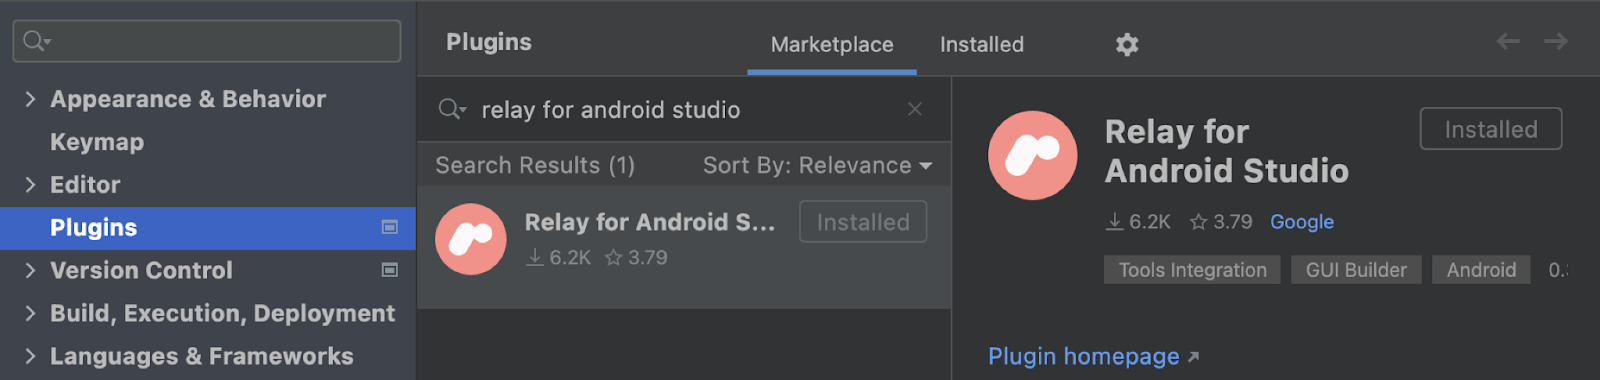 Android Studio eklenti ayarları